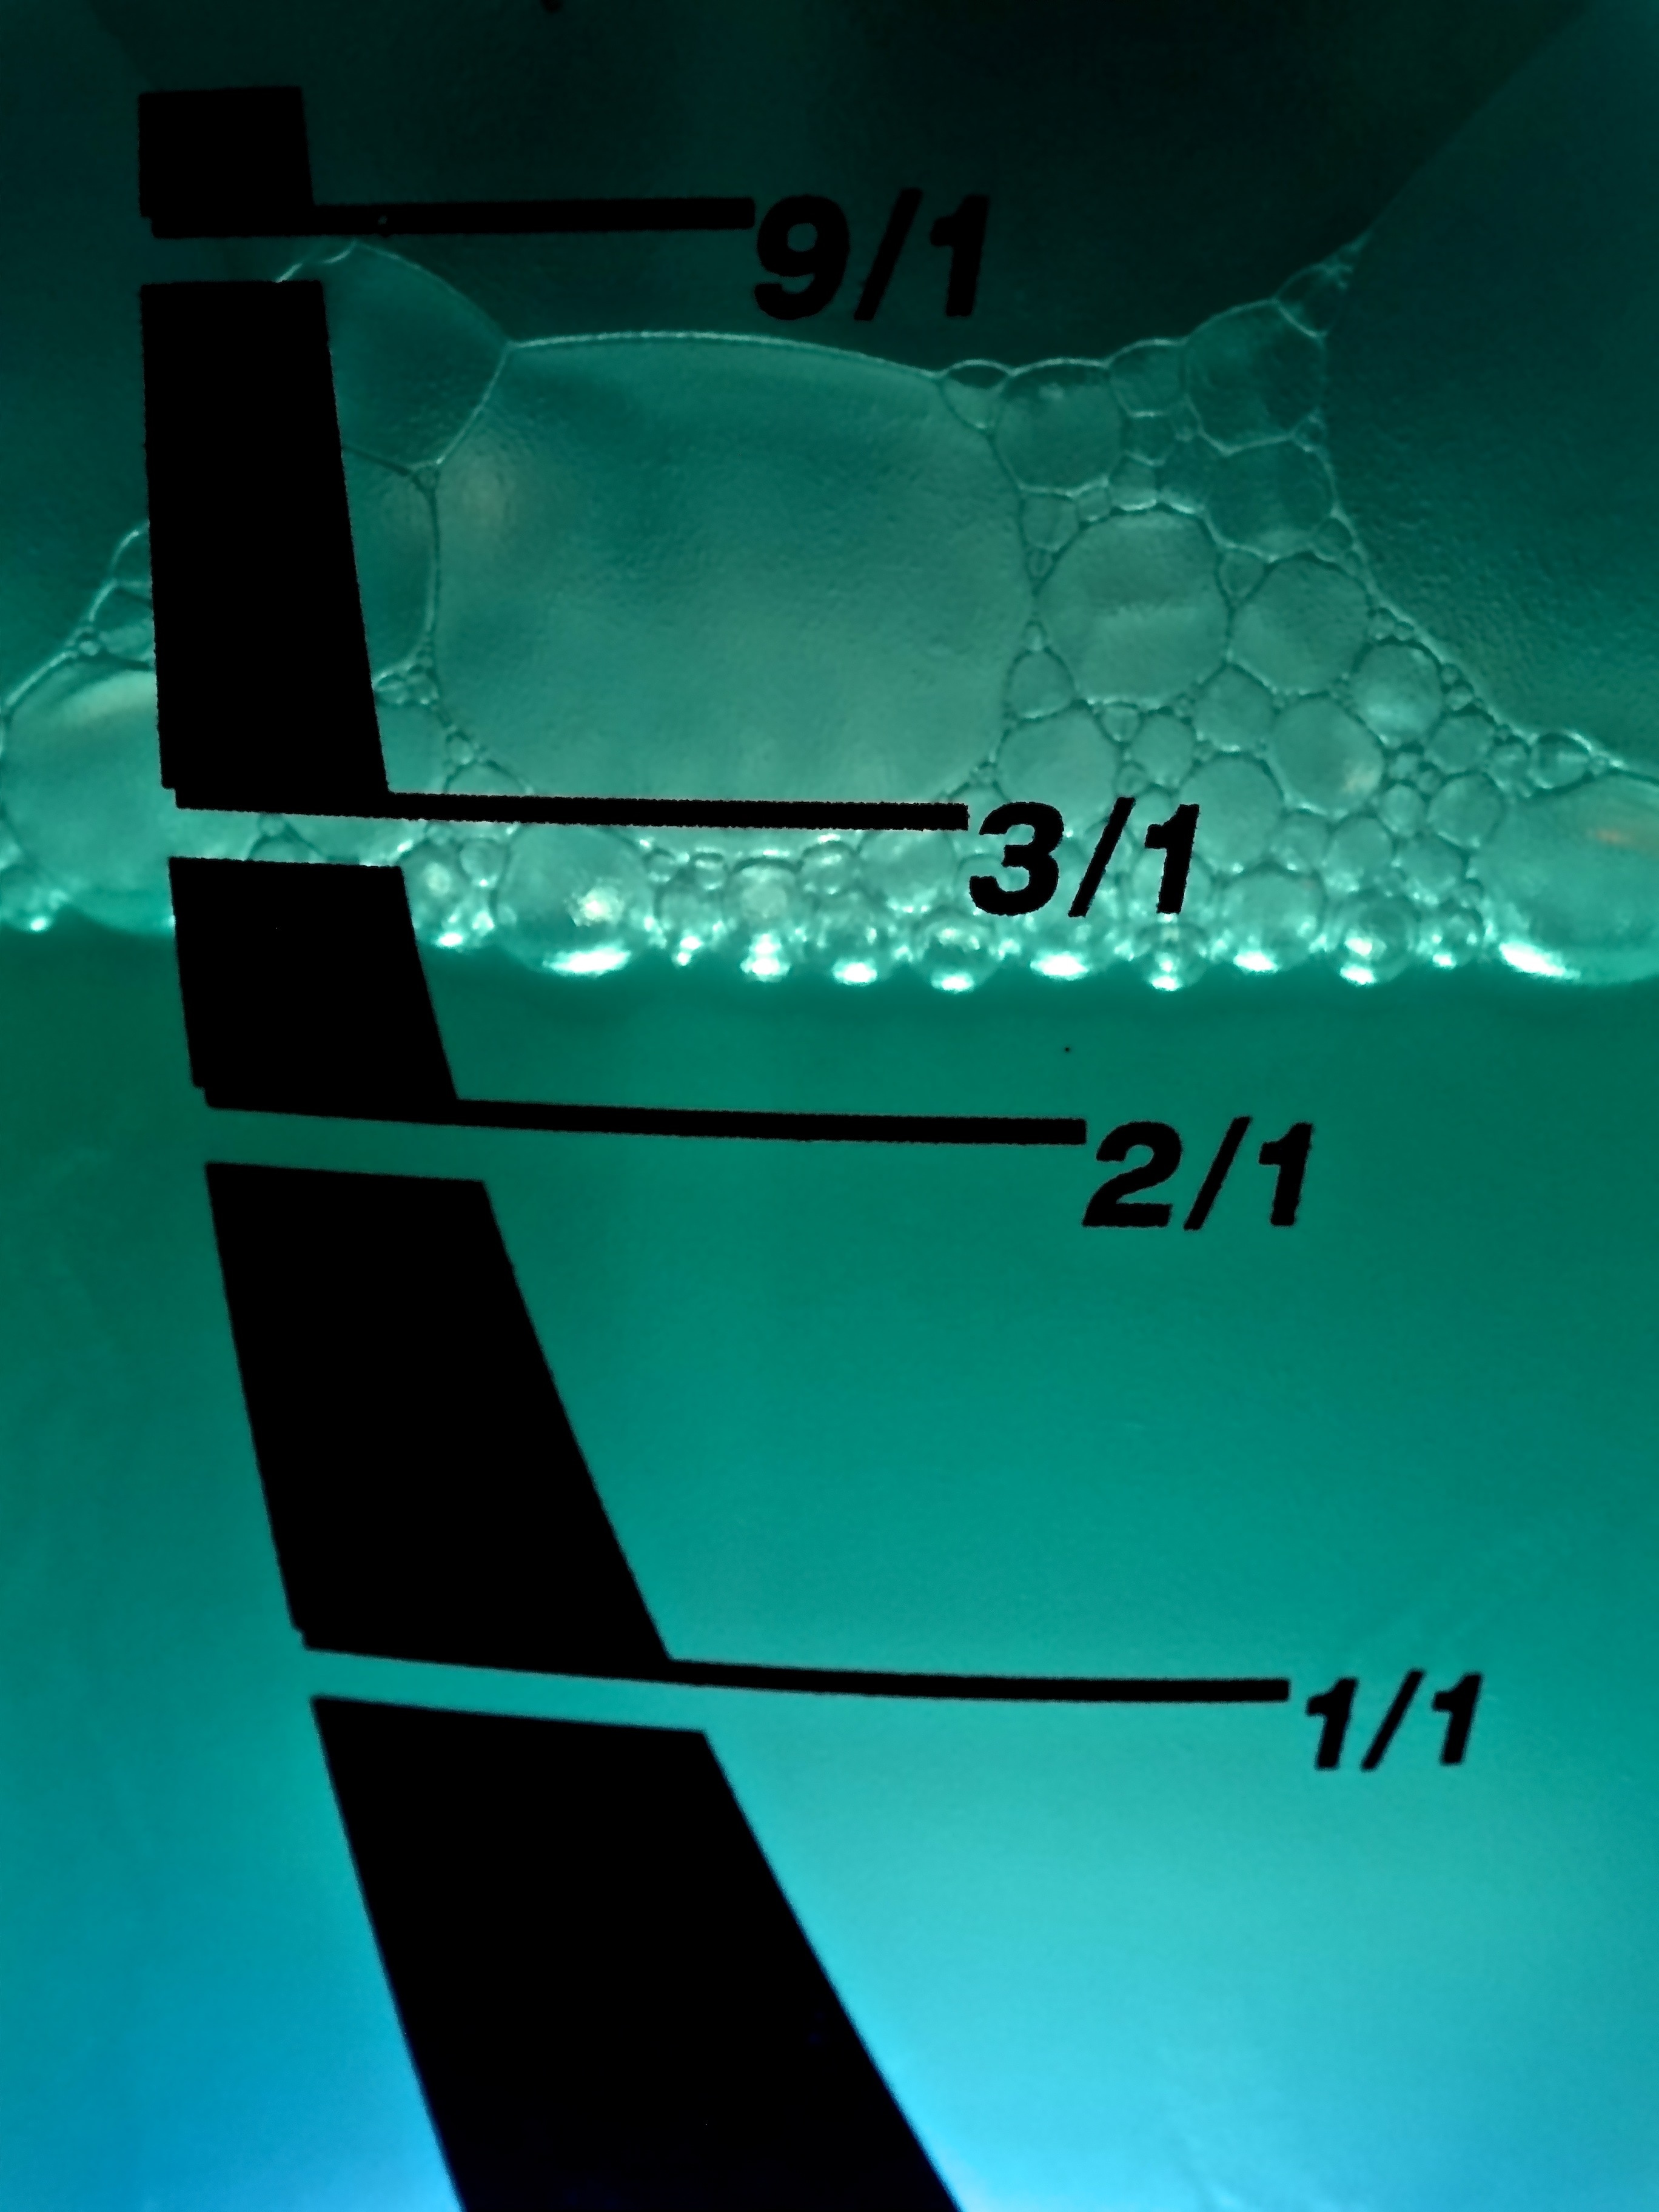 Water Level Indicator, Liquid, Ad, wealth, shiny